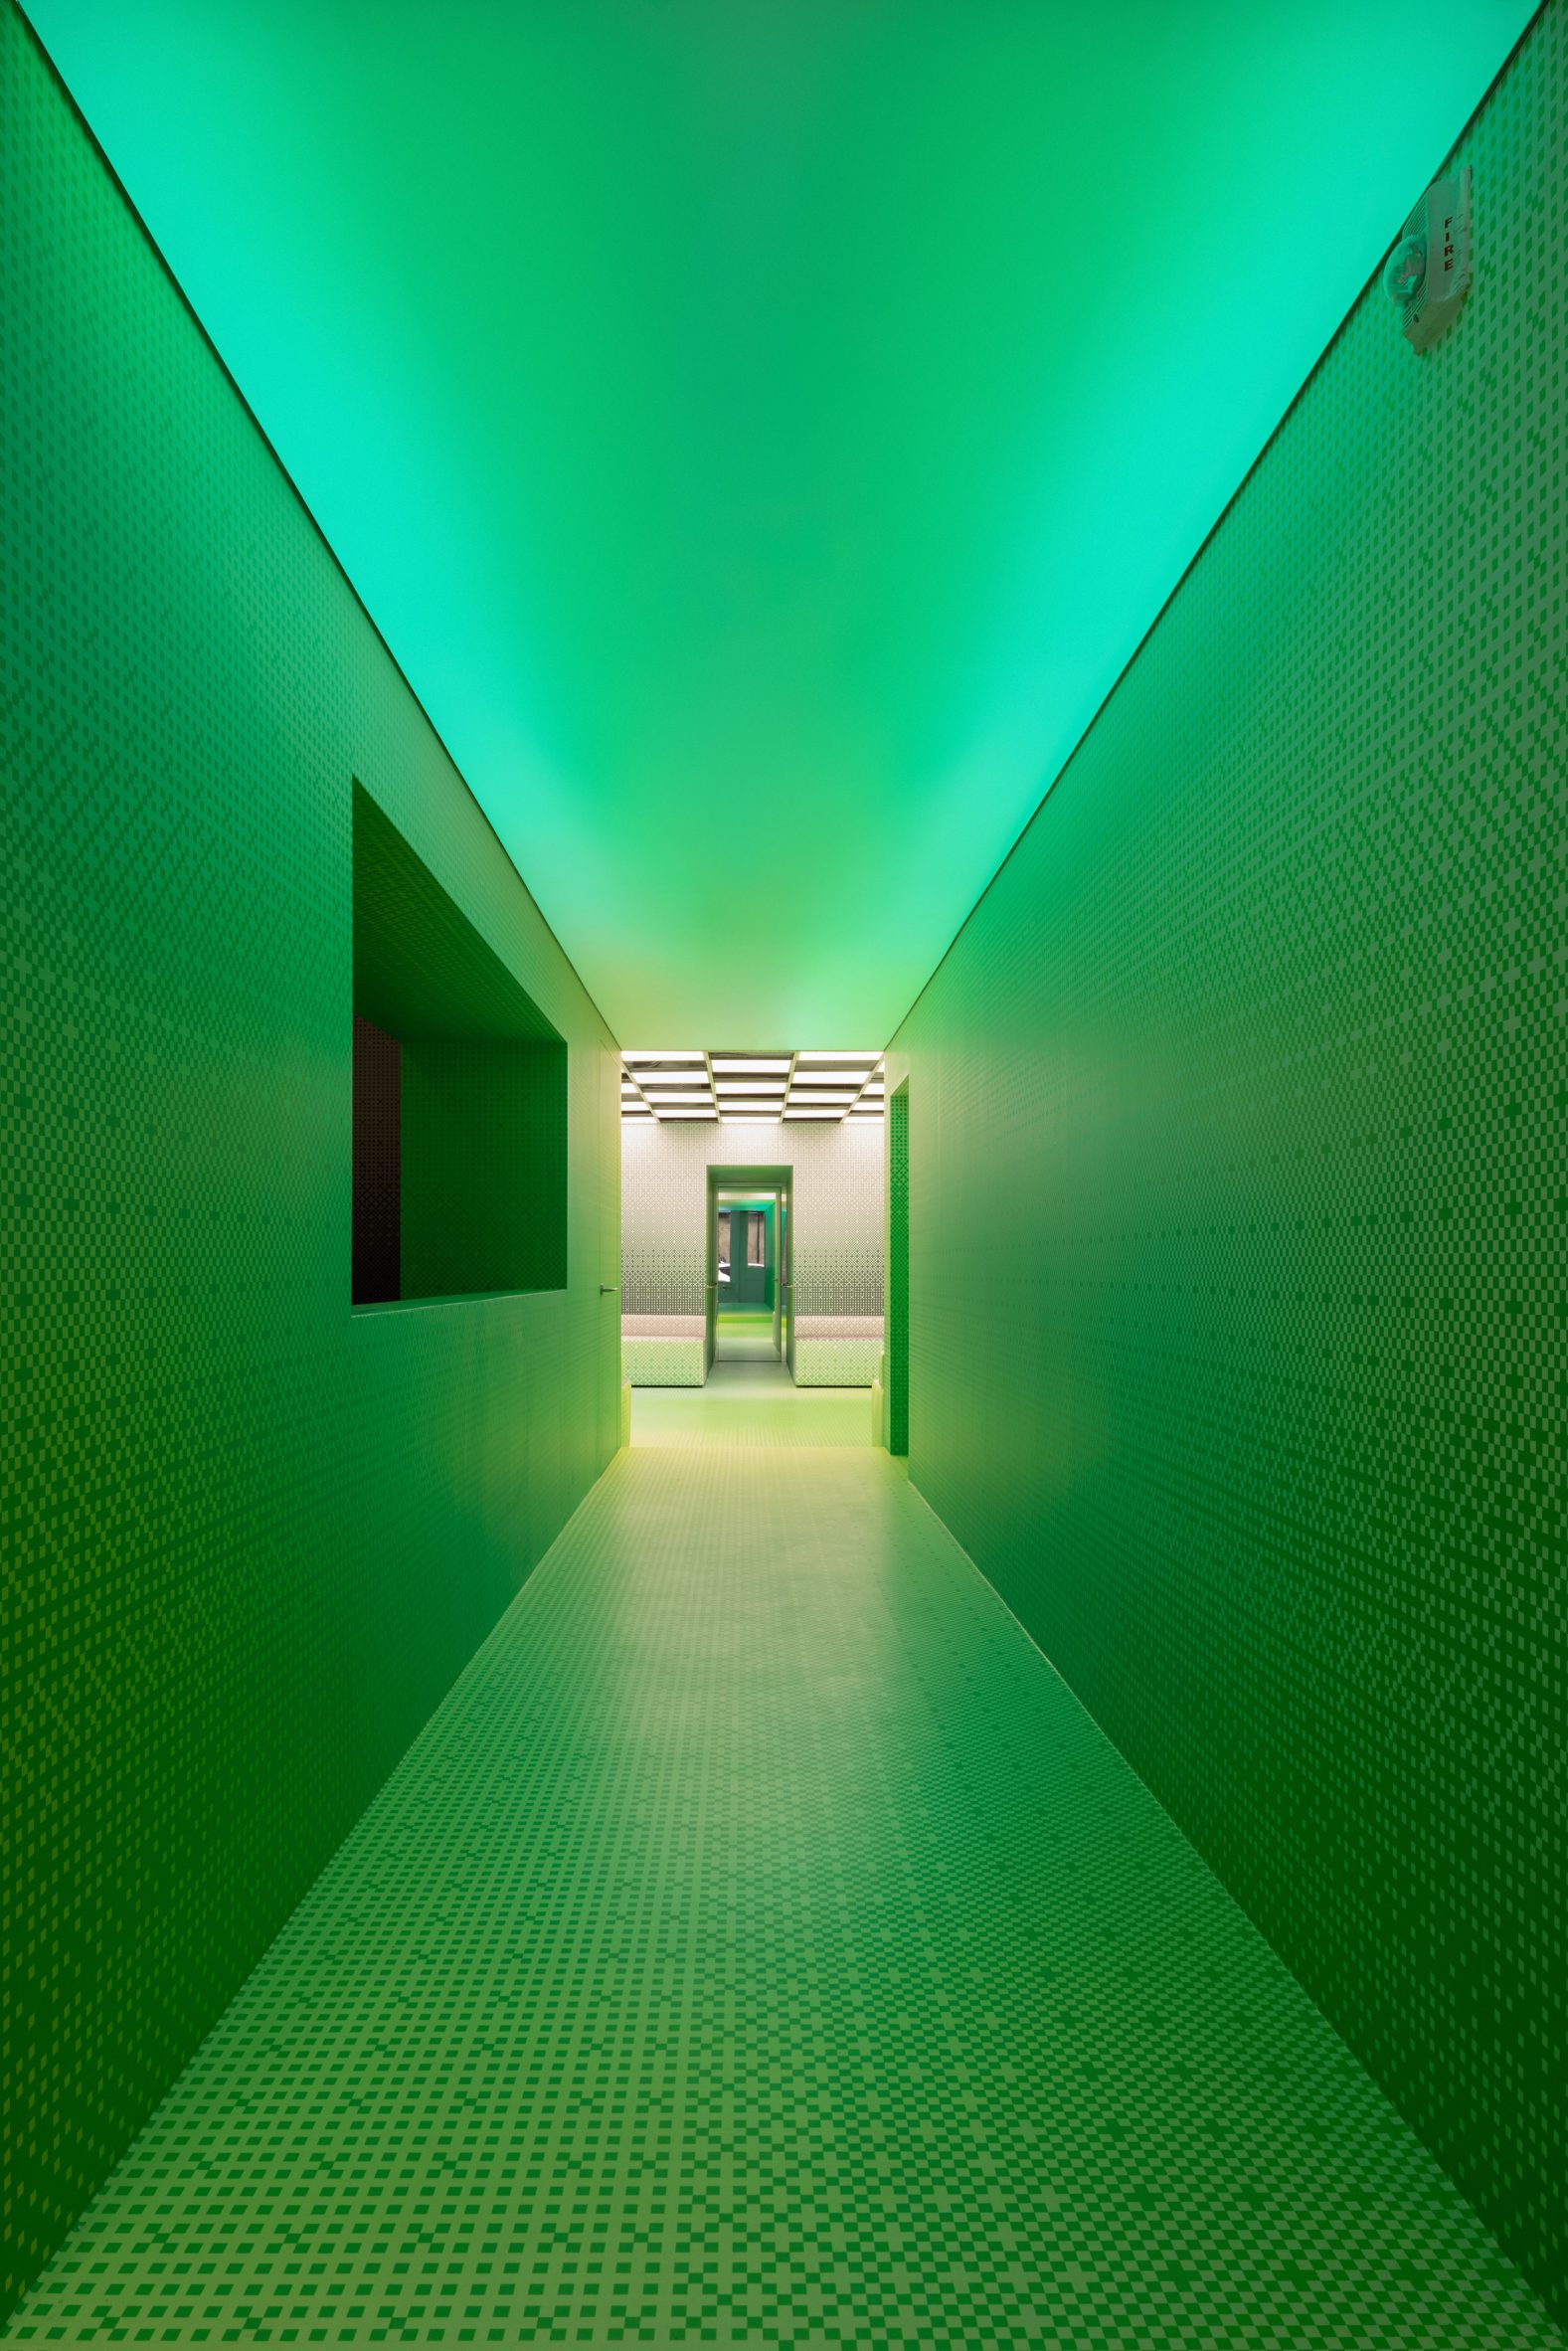 Green hallway with pixel print